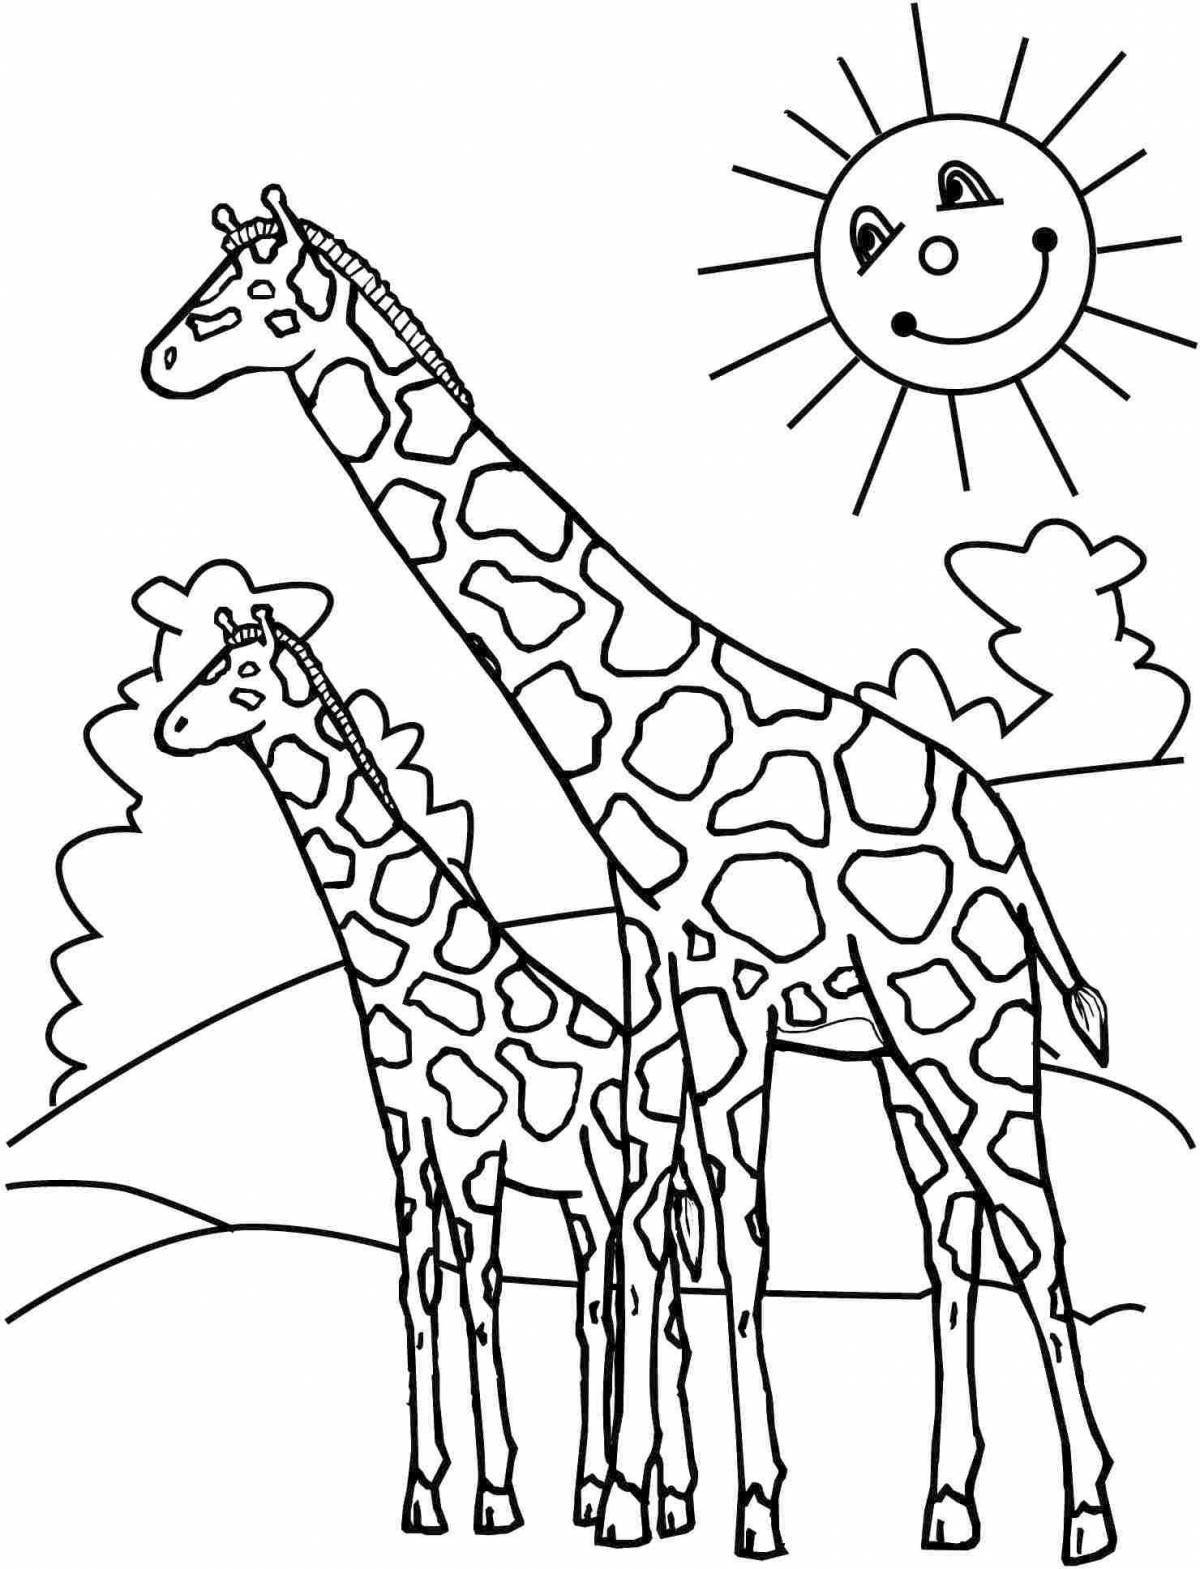 Creative giraffe pattern for kids